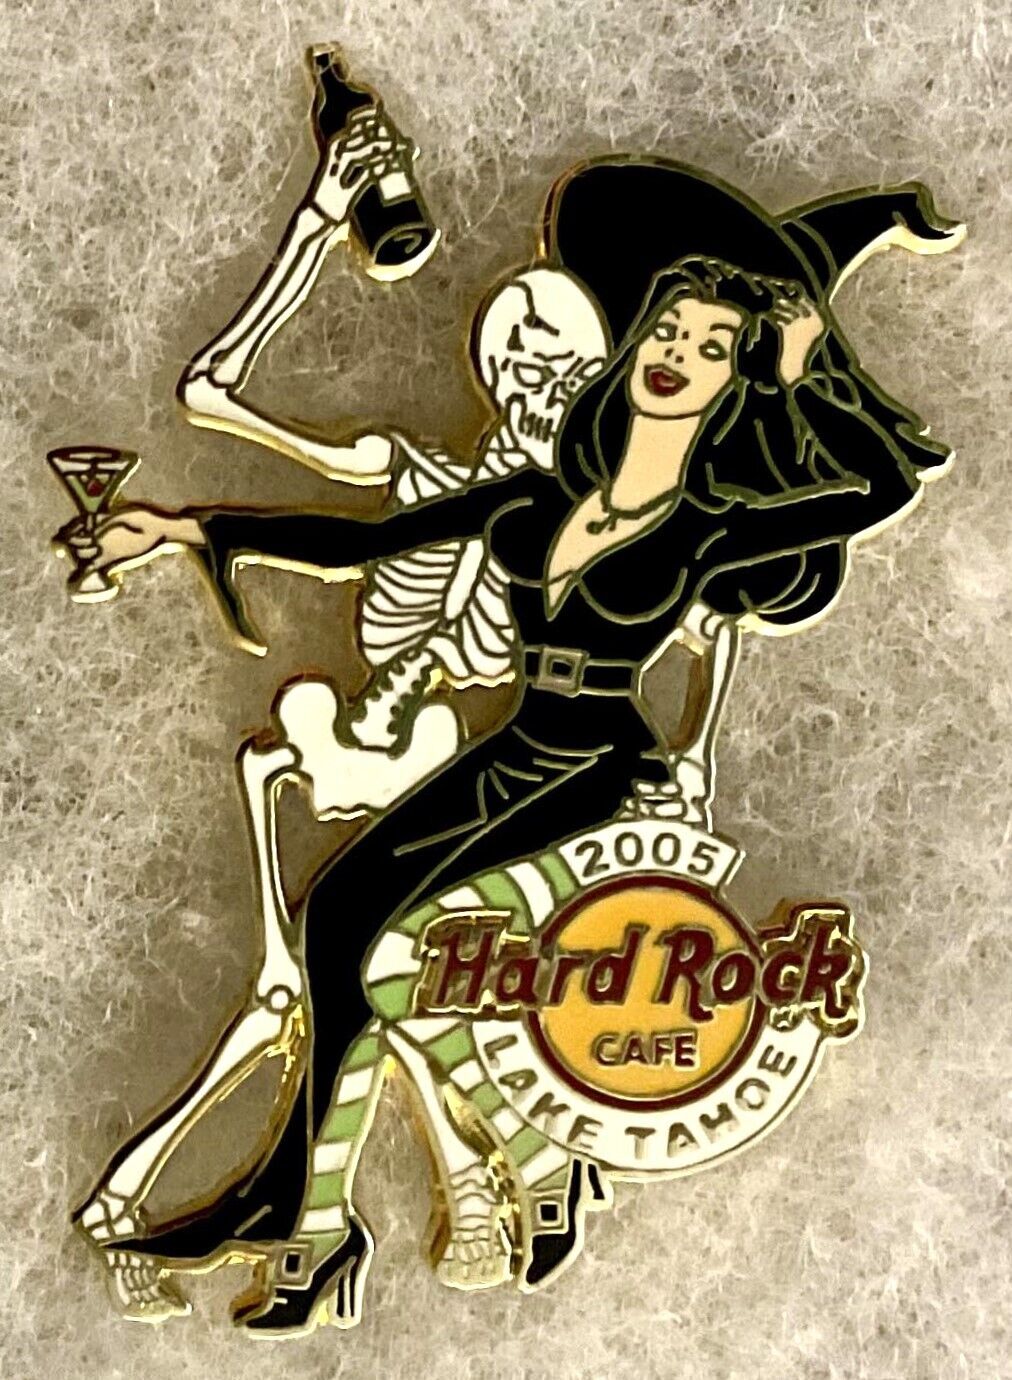 HARD ROCK CAFE LAKE TAHOE SEXY WITCH GIRL DANCING WITH SKELETON PIN # 29521